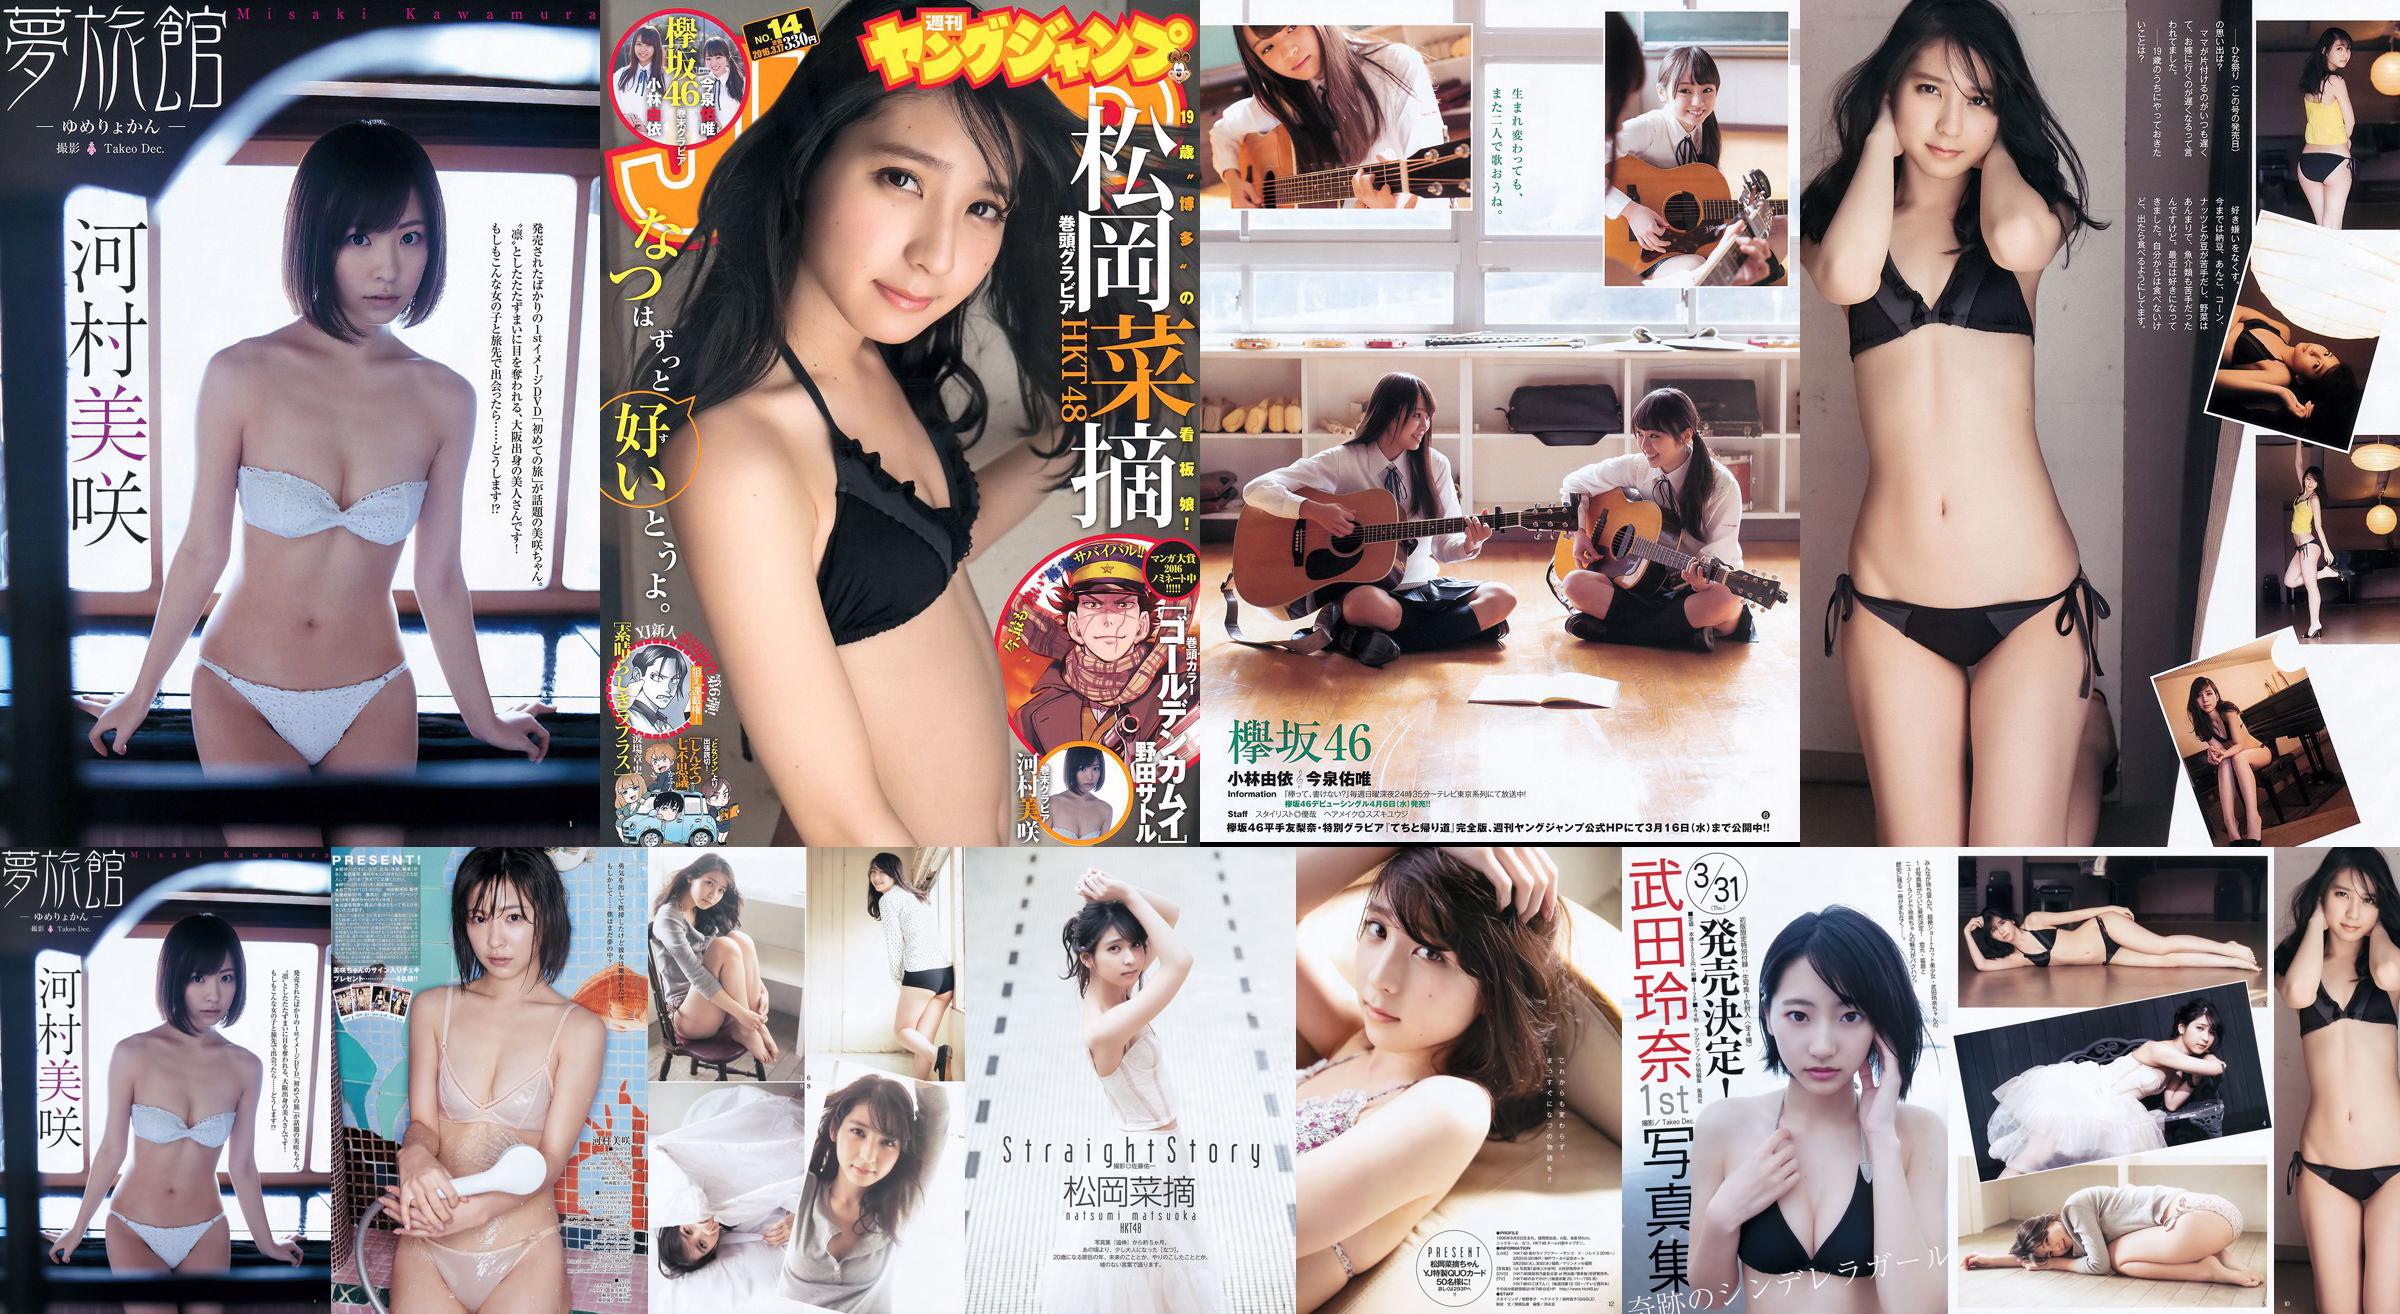 Hái rau Muraoka Yui Kobayashi Yui Imaizumi Misaki Kawamura [Weekly Young Jump] Tạp chí ảnh số 14 năm 2016 No.48a7b7 Trang 1